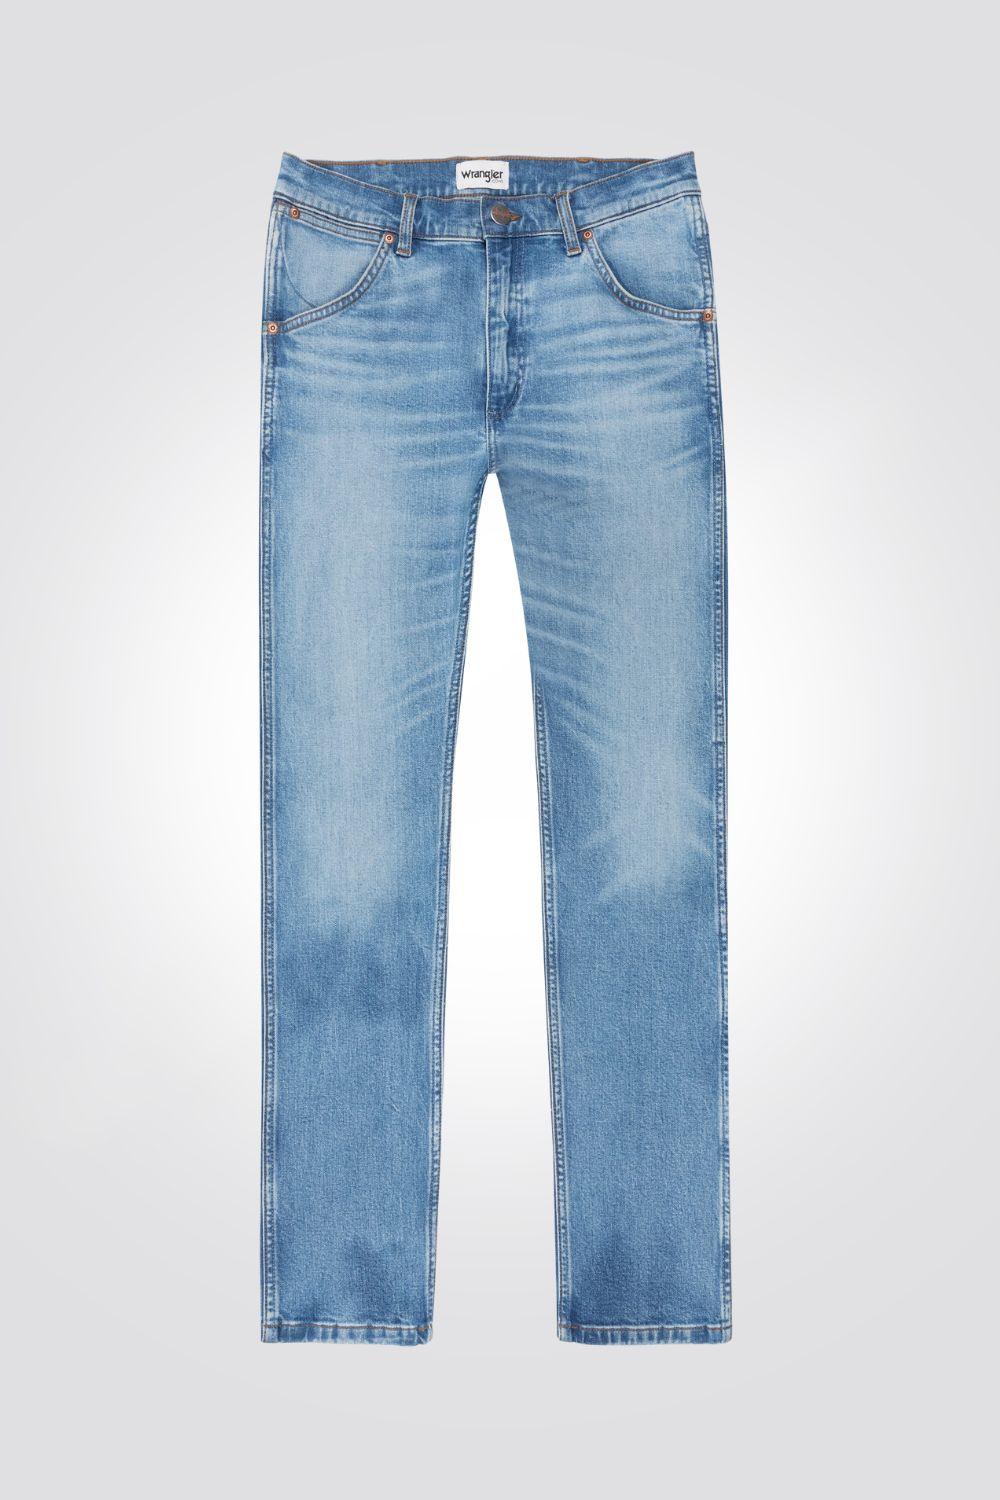 WRANGLER - ג'ינס Denim בצבע כחול בהיר - MASHBIR//365